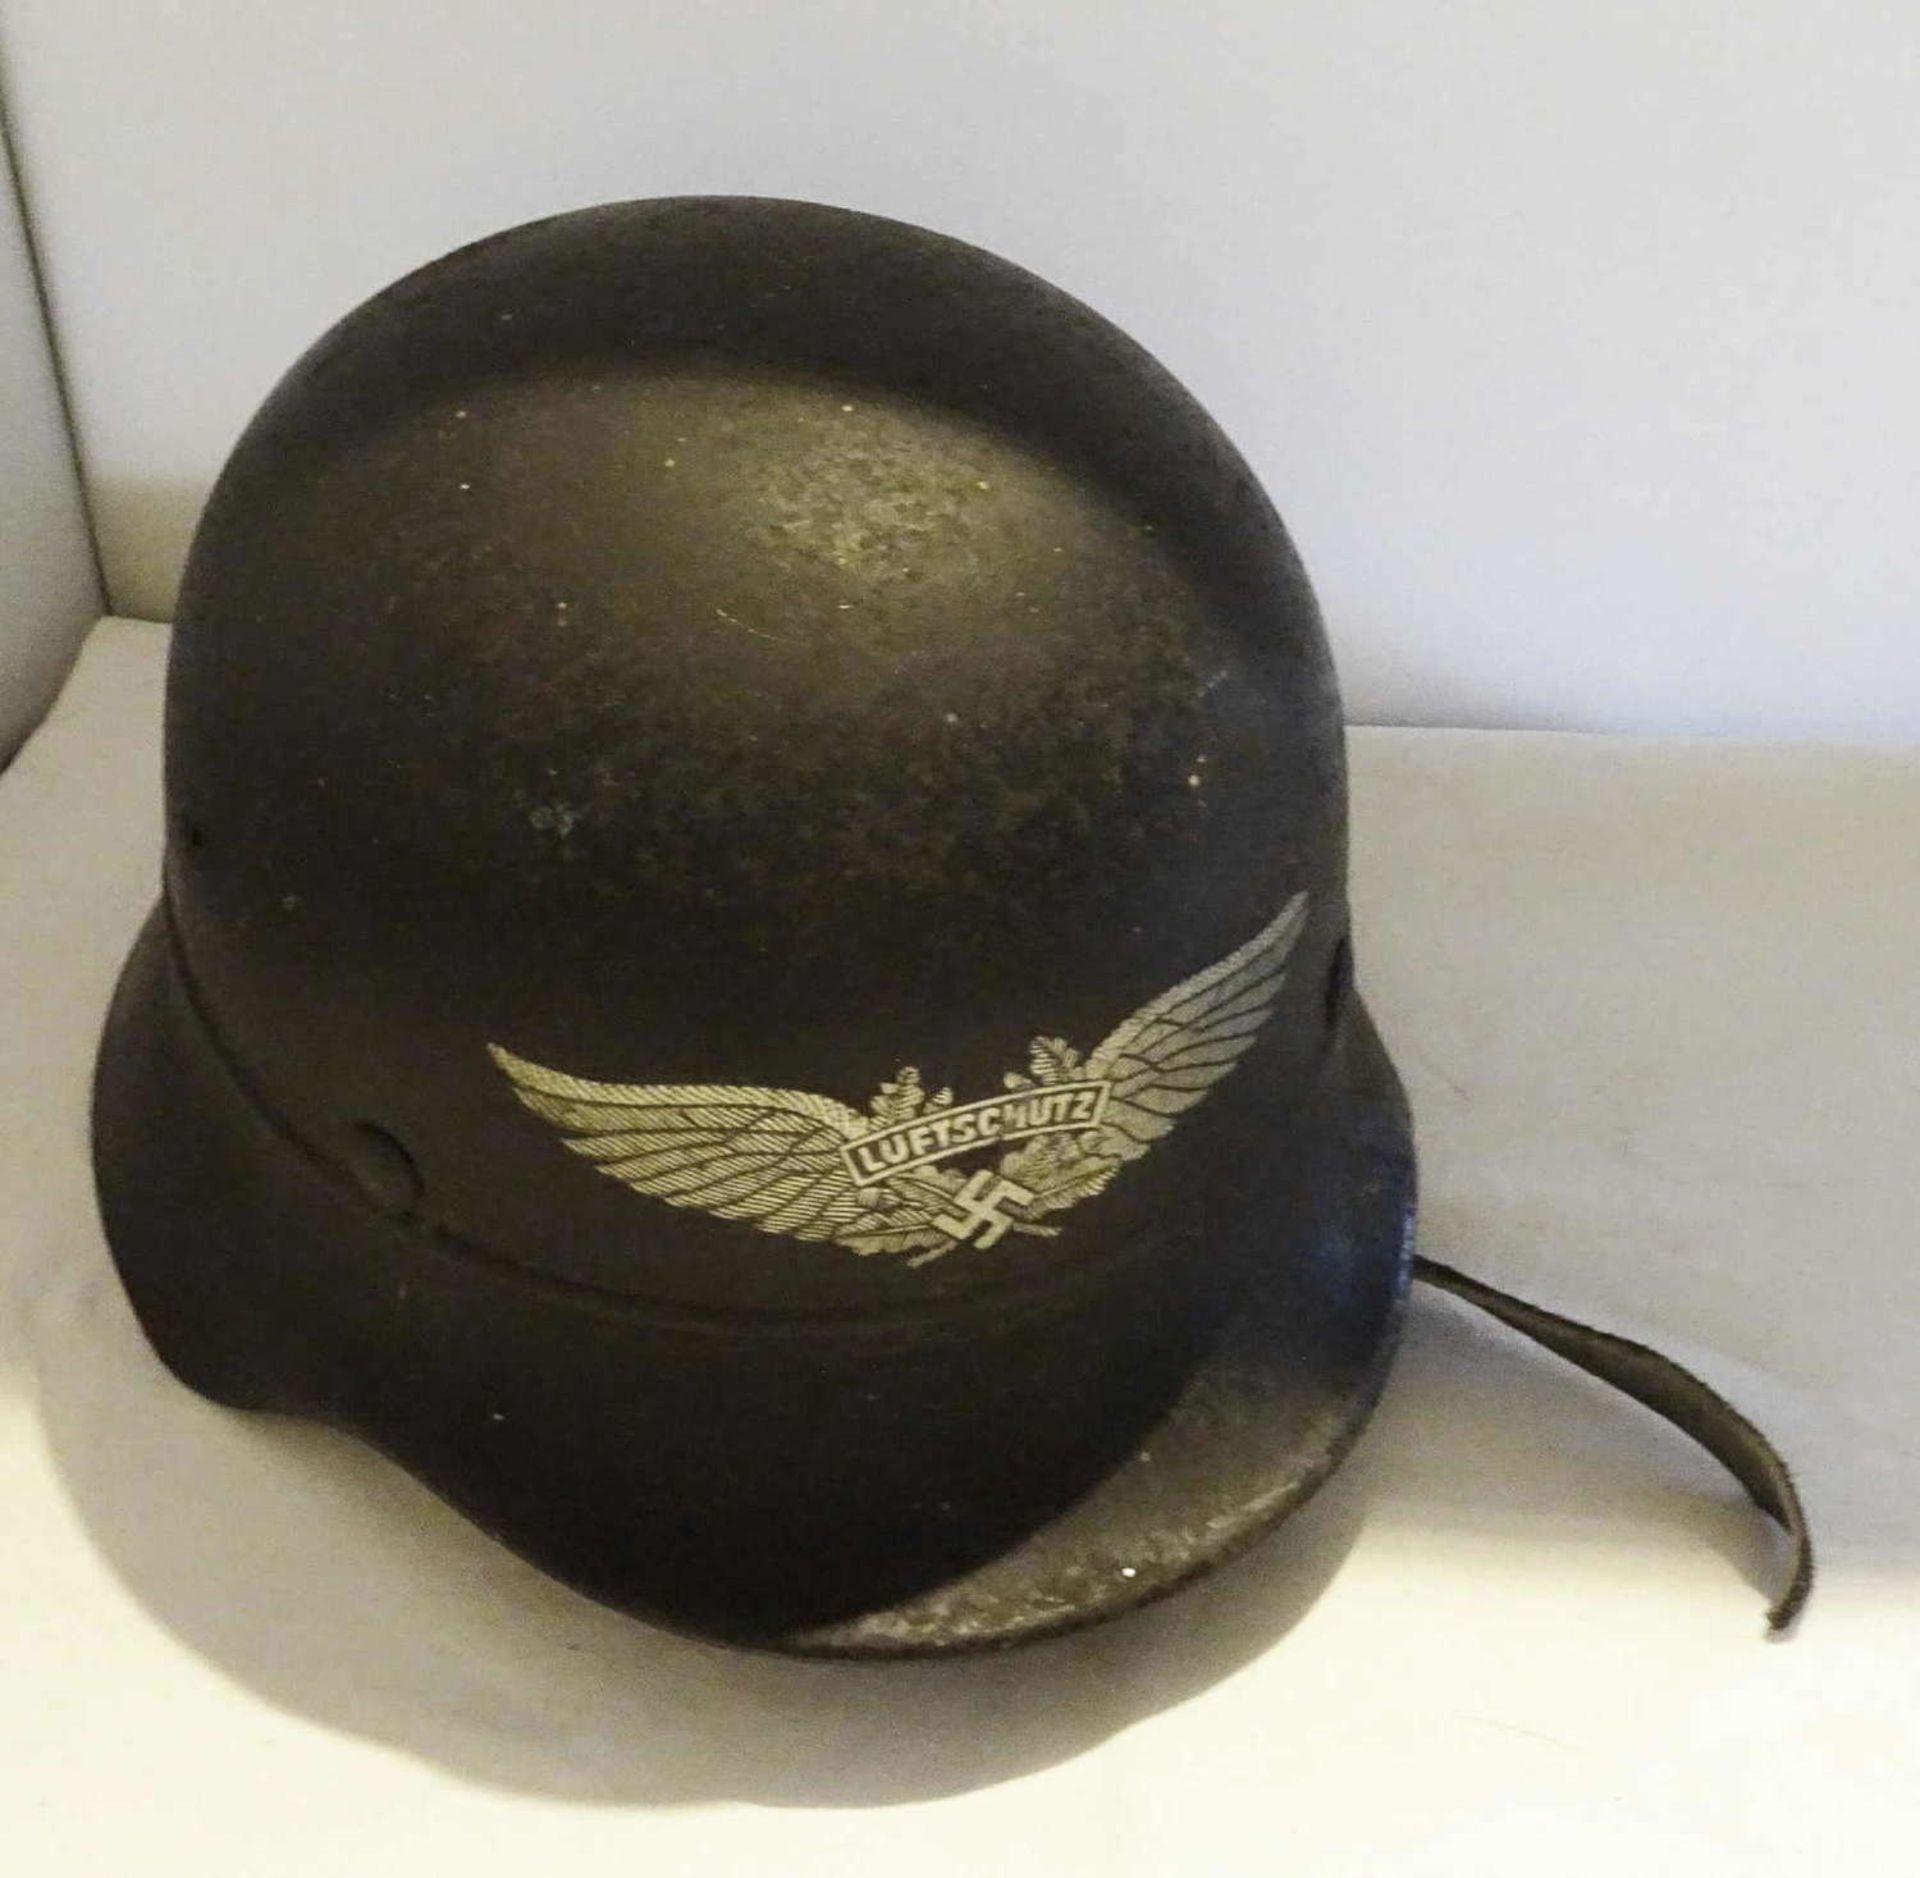 1 original air raid steel helmet with inner life, good condition. Please visit!